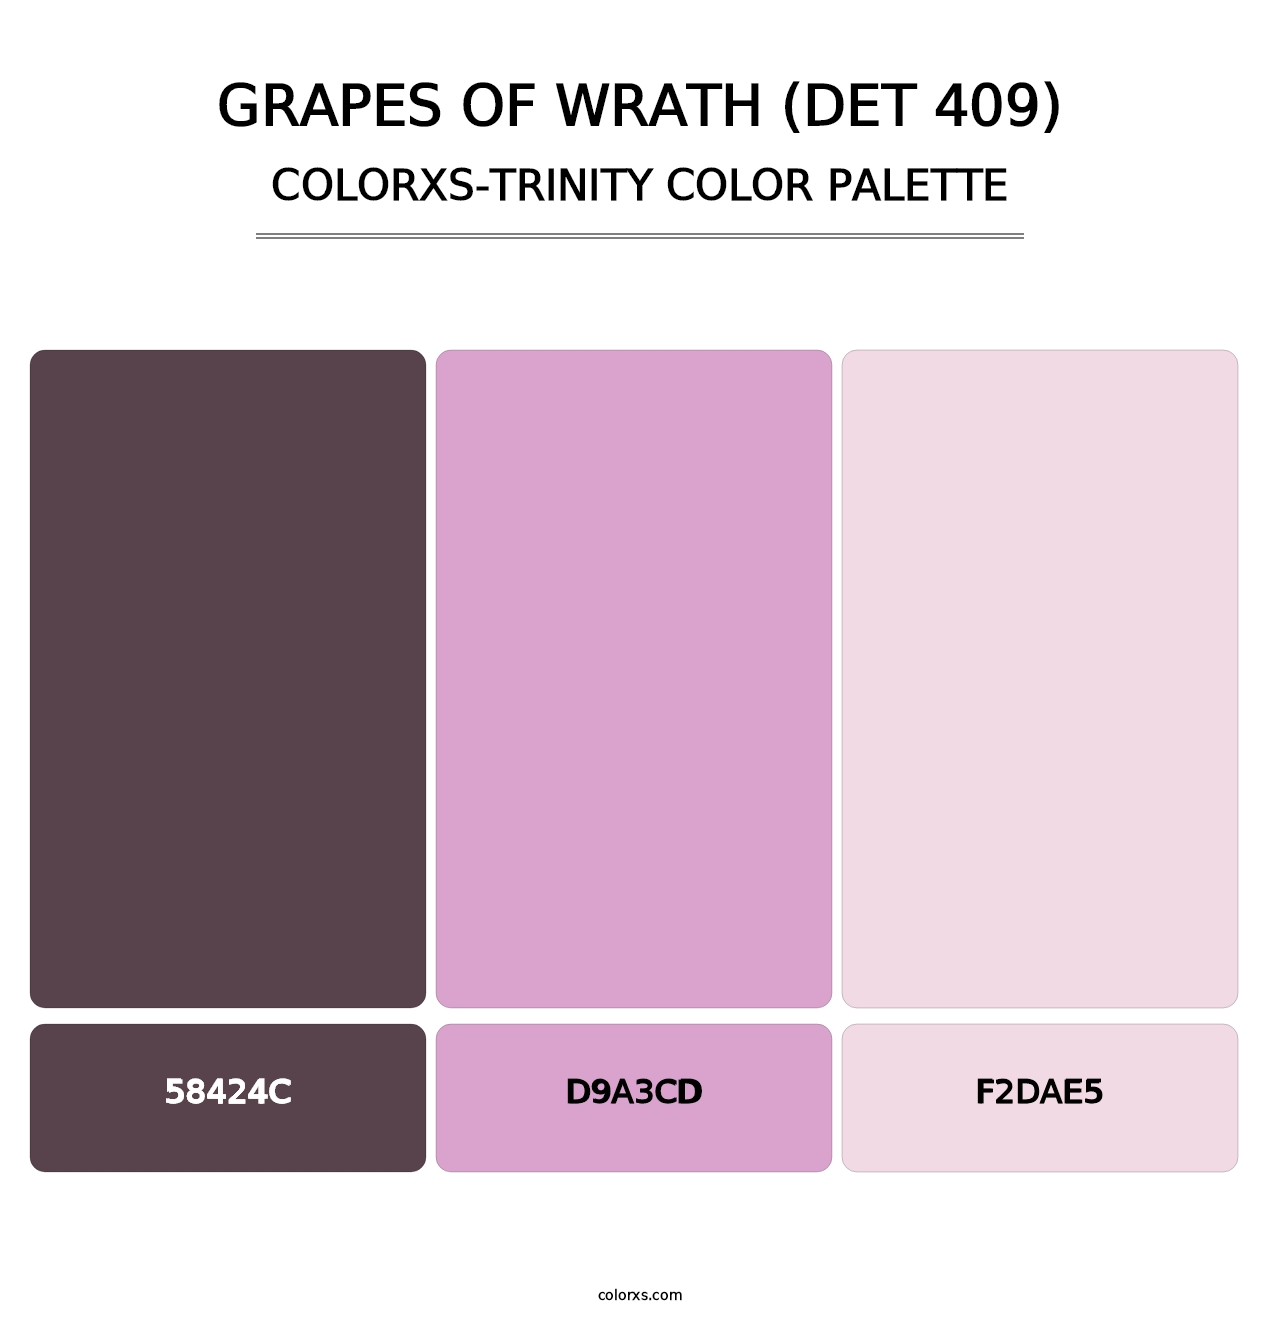 Grapes of Wrath (DET 409) - Colorxs Trinity Palette